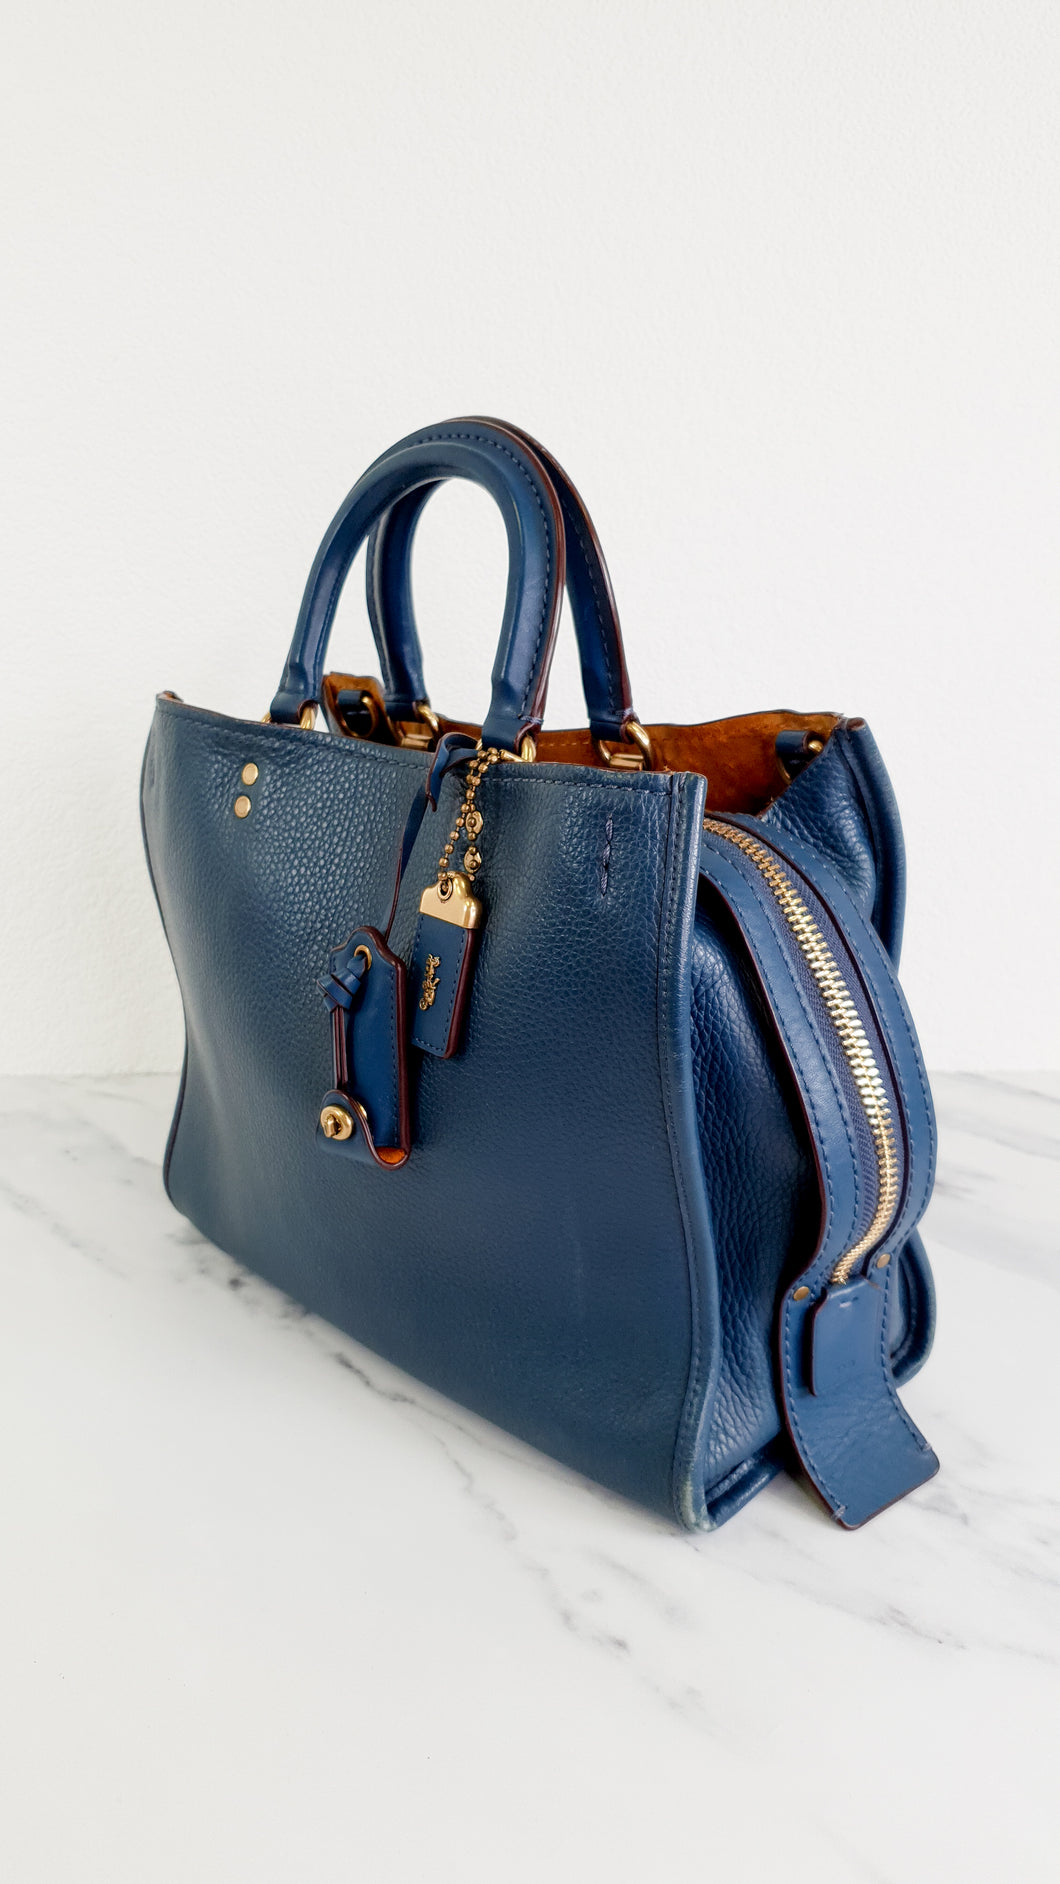 Coach 1941 Rogue 31 in Dark Denim Blue - Shoulder Bag Satchel Handbag - Coach 38124